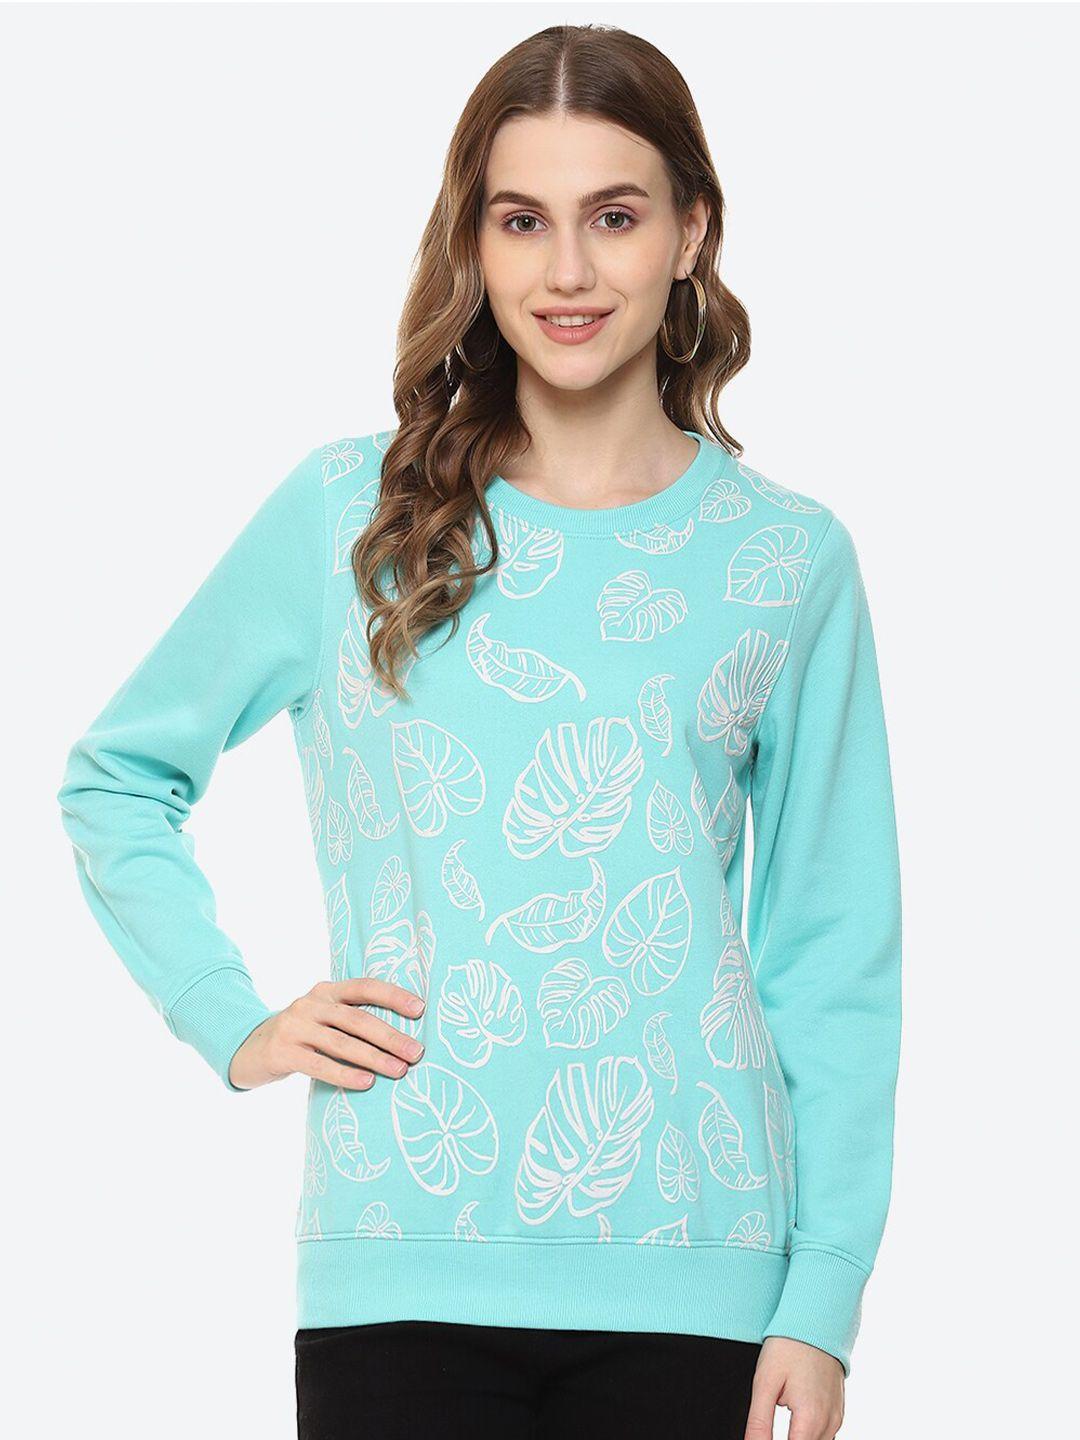 2bme floral printed cotton sweatshirt